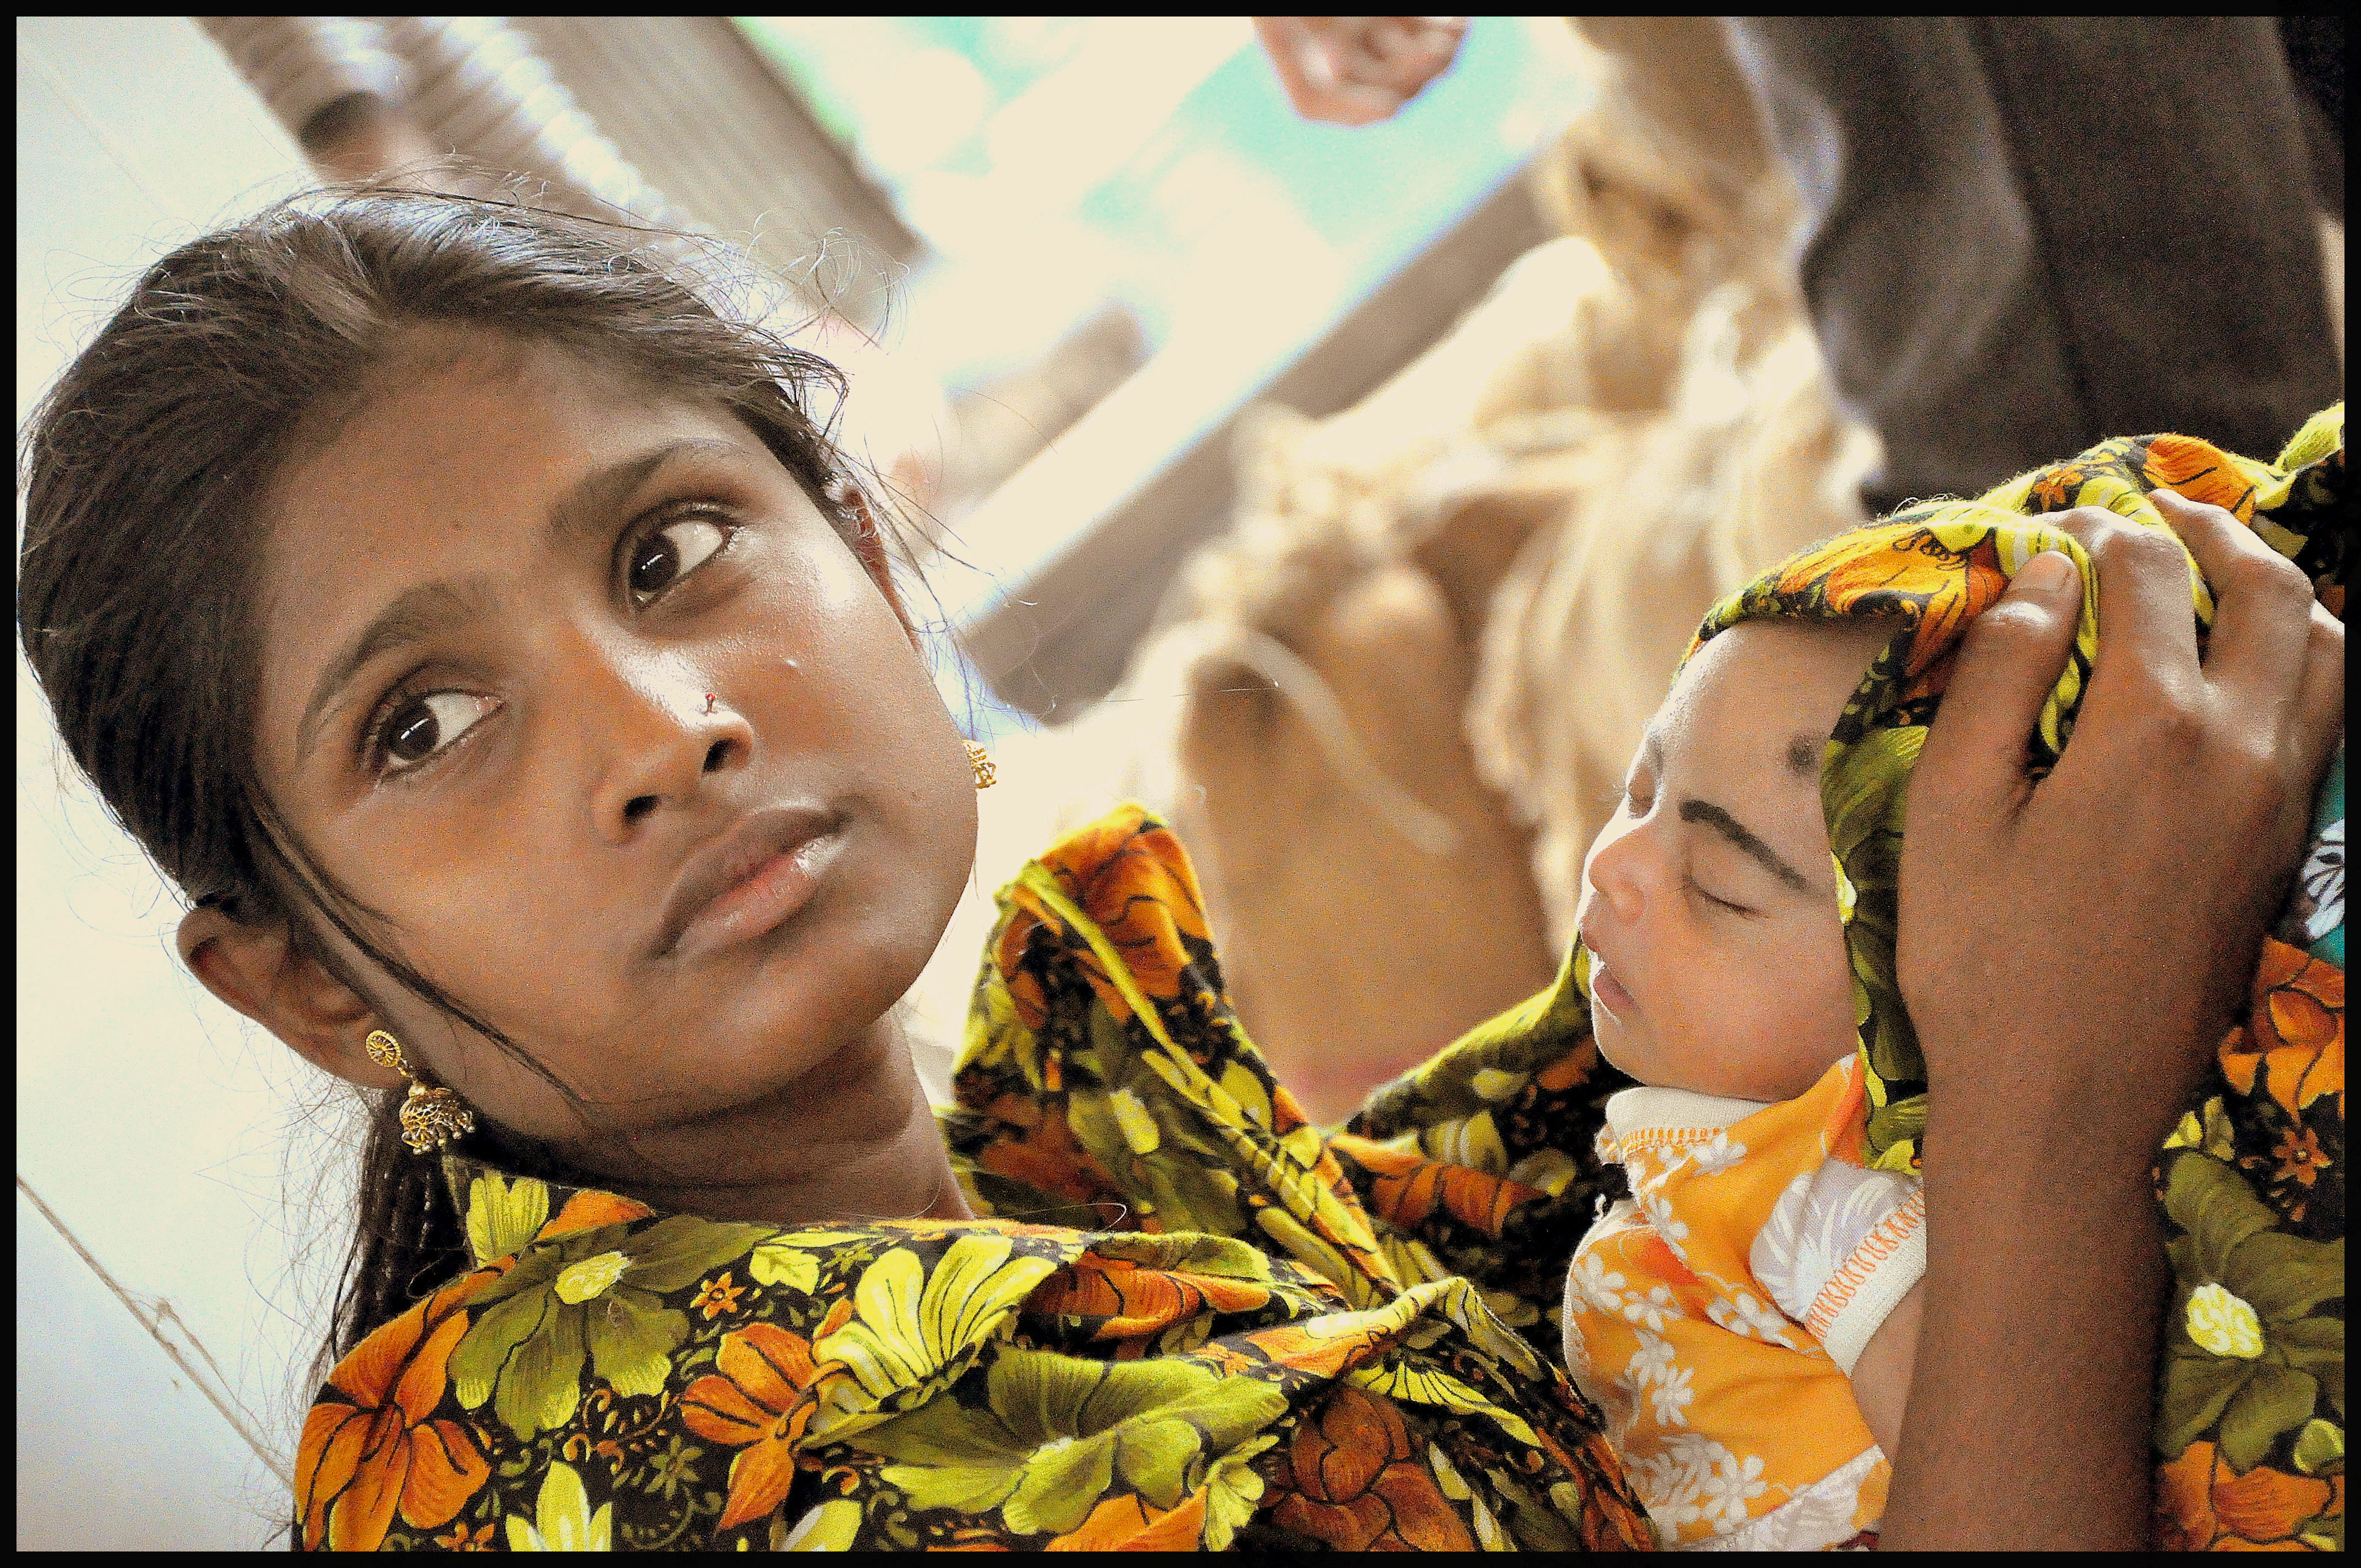 A child bride in Dhaka, Bangladesh. Source: SAM Nasim, Creative Commons